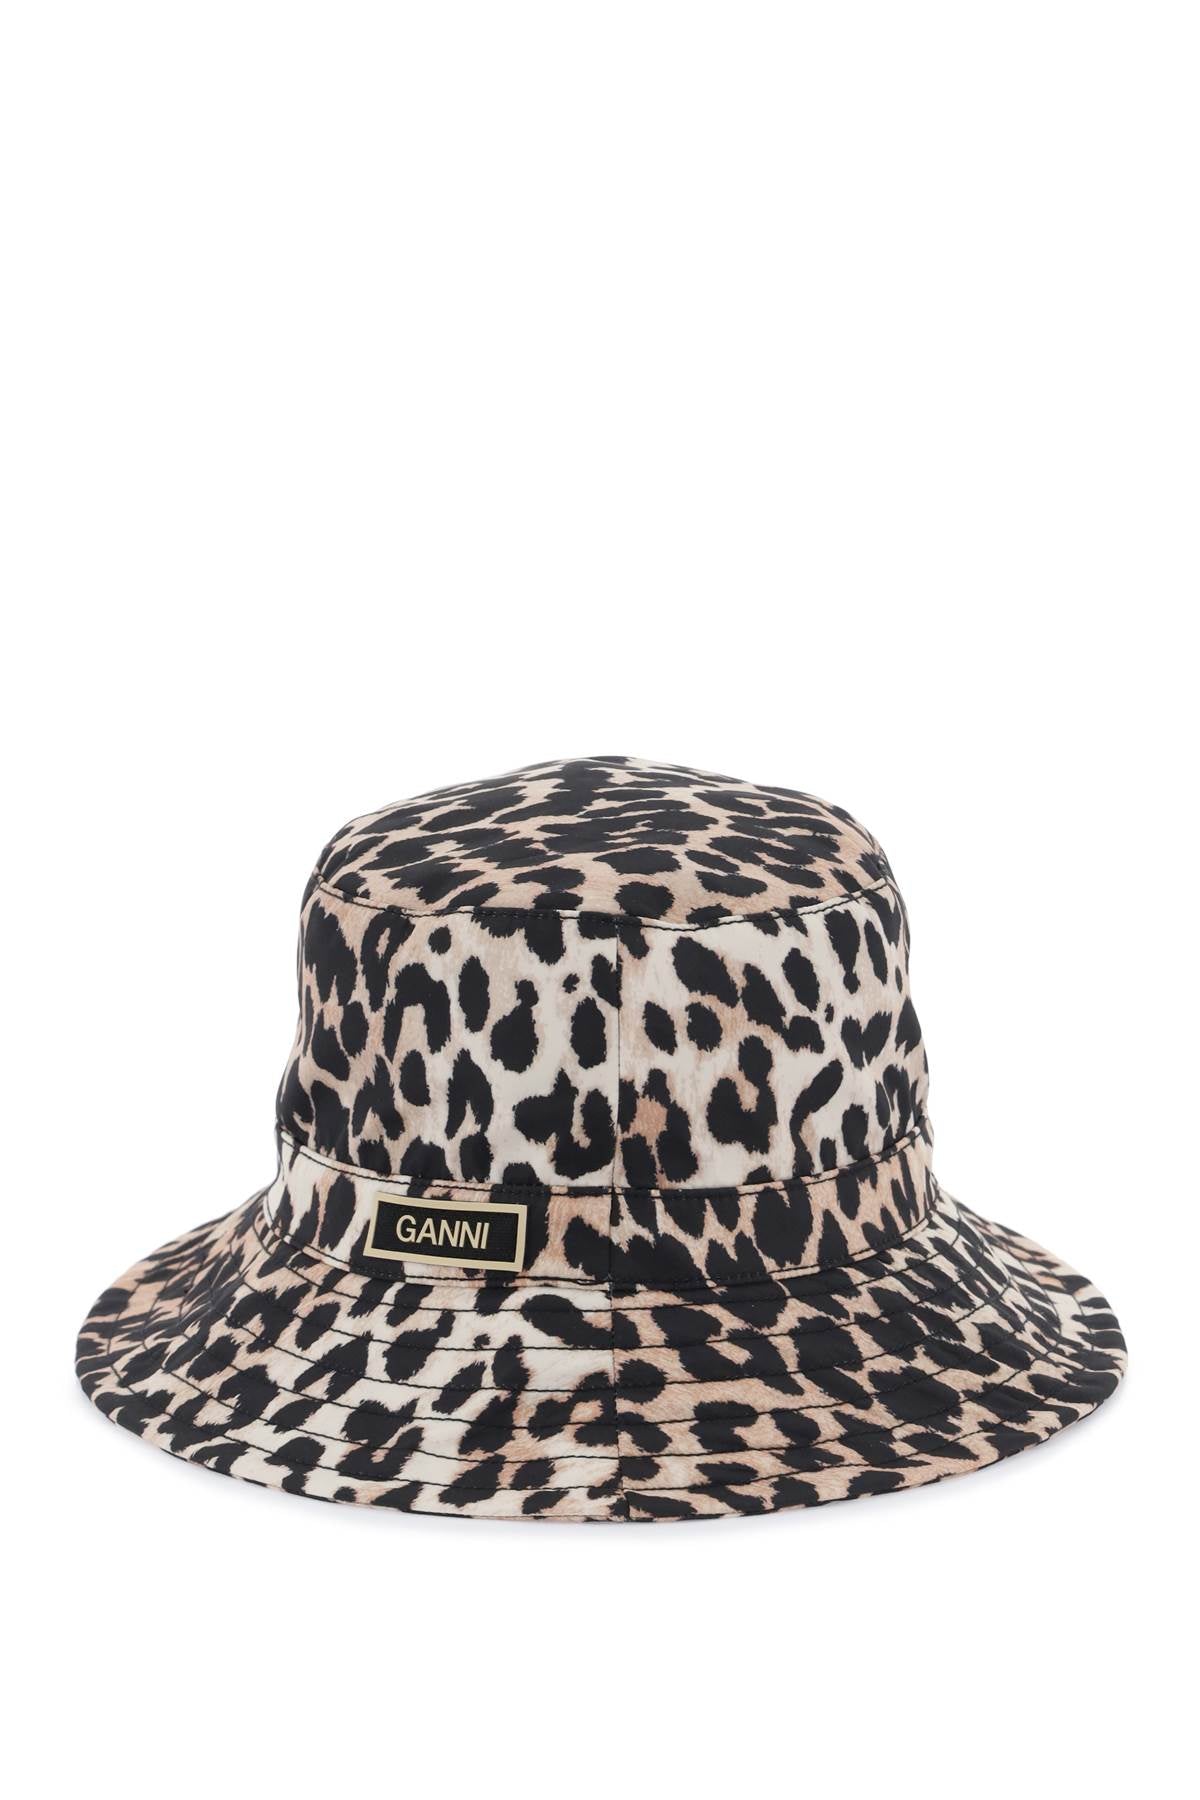 Ganni animal print bucket hat